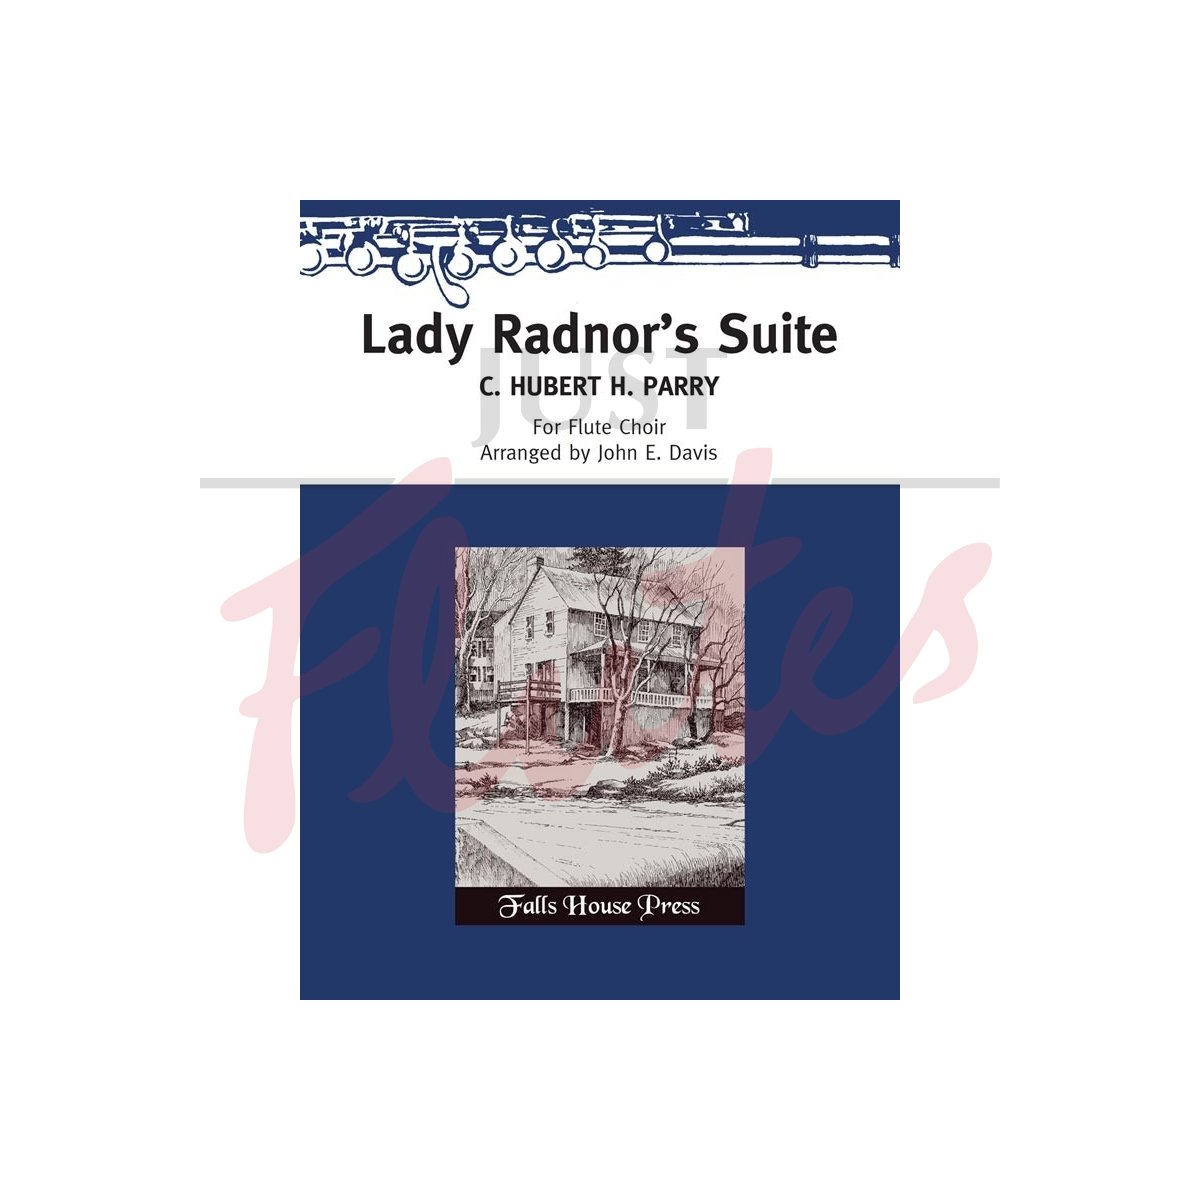 Lady Radnor's Suite